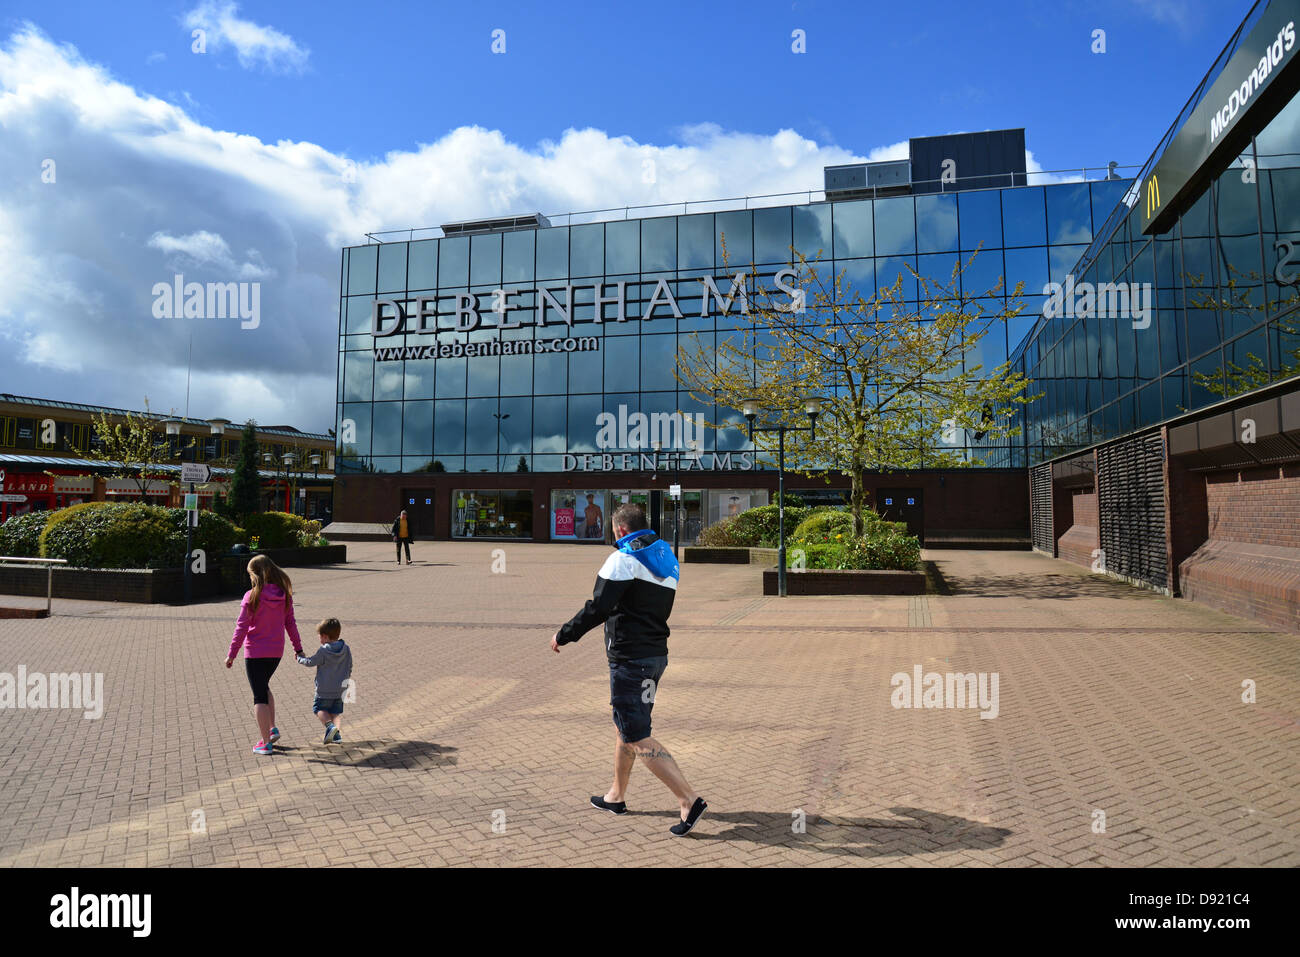 Debenham department store, Telford Shopping centre, Telford, Shropshire, England, United Kingdom Stock Photo